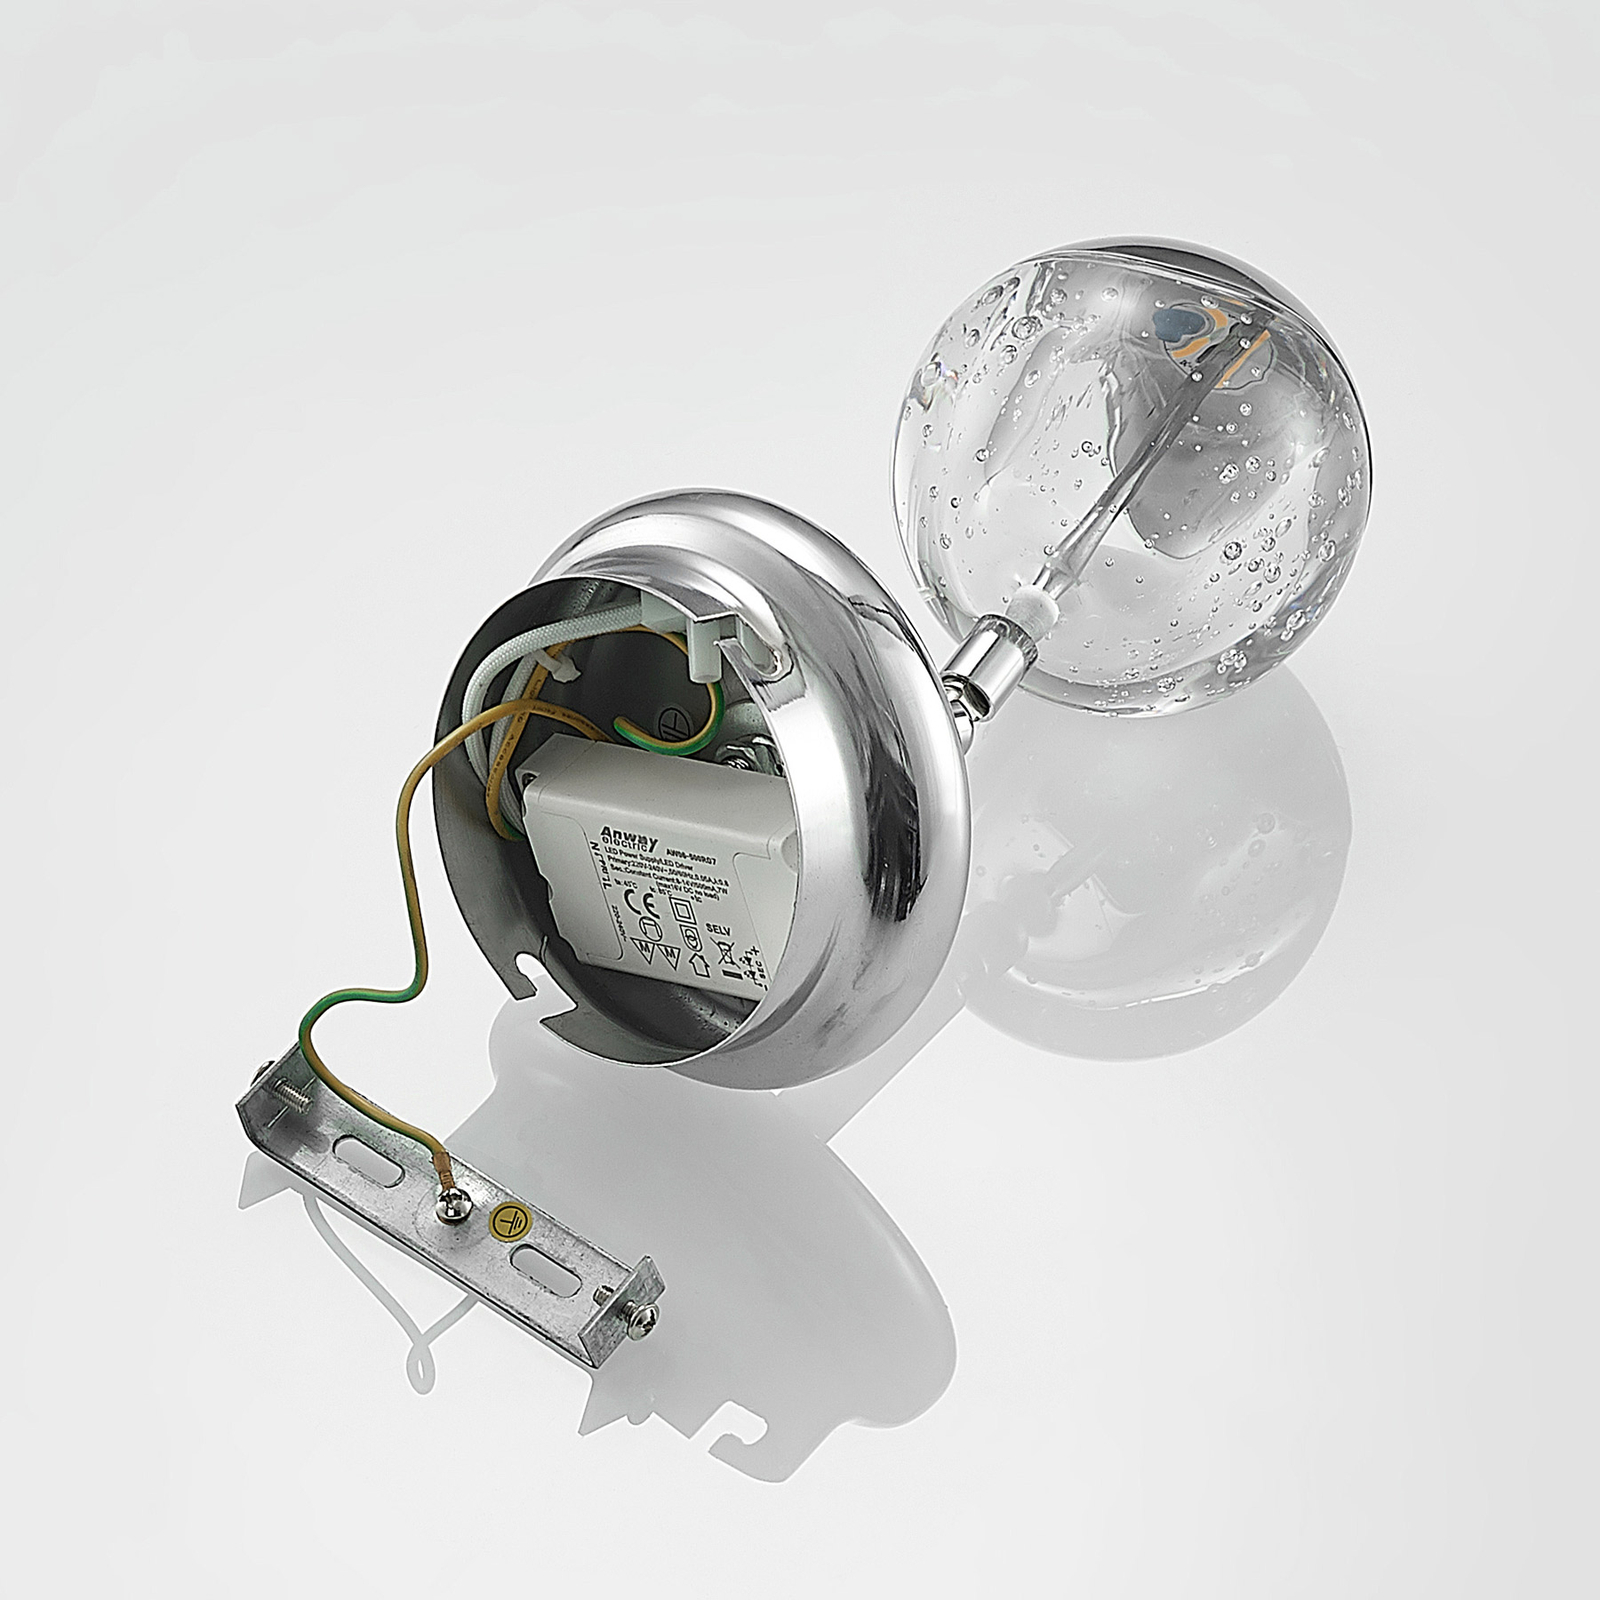 Lucande Kilio LED-spot üveg ernyővel, króm